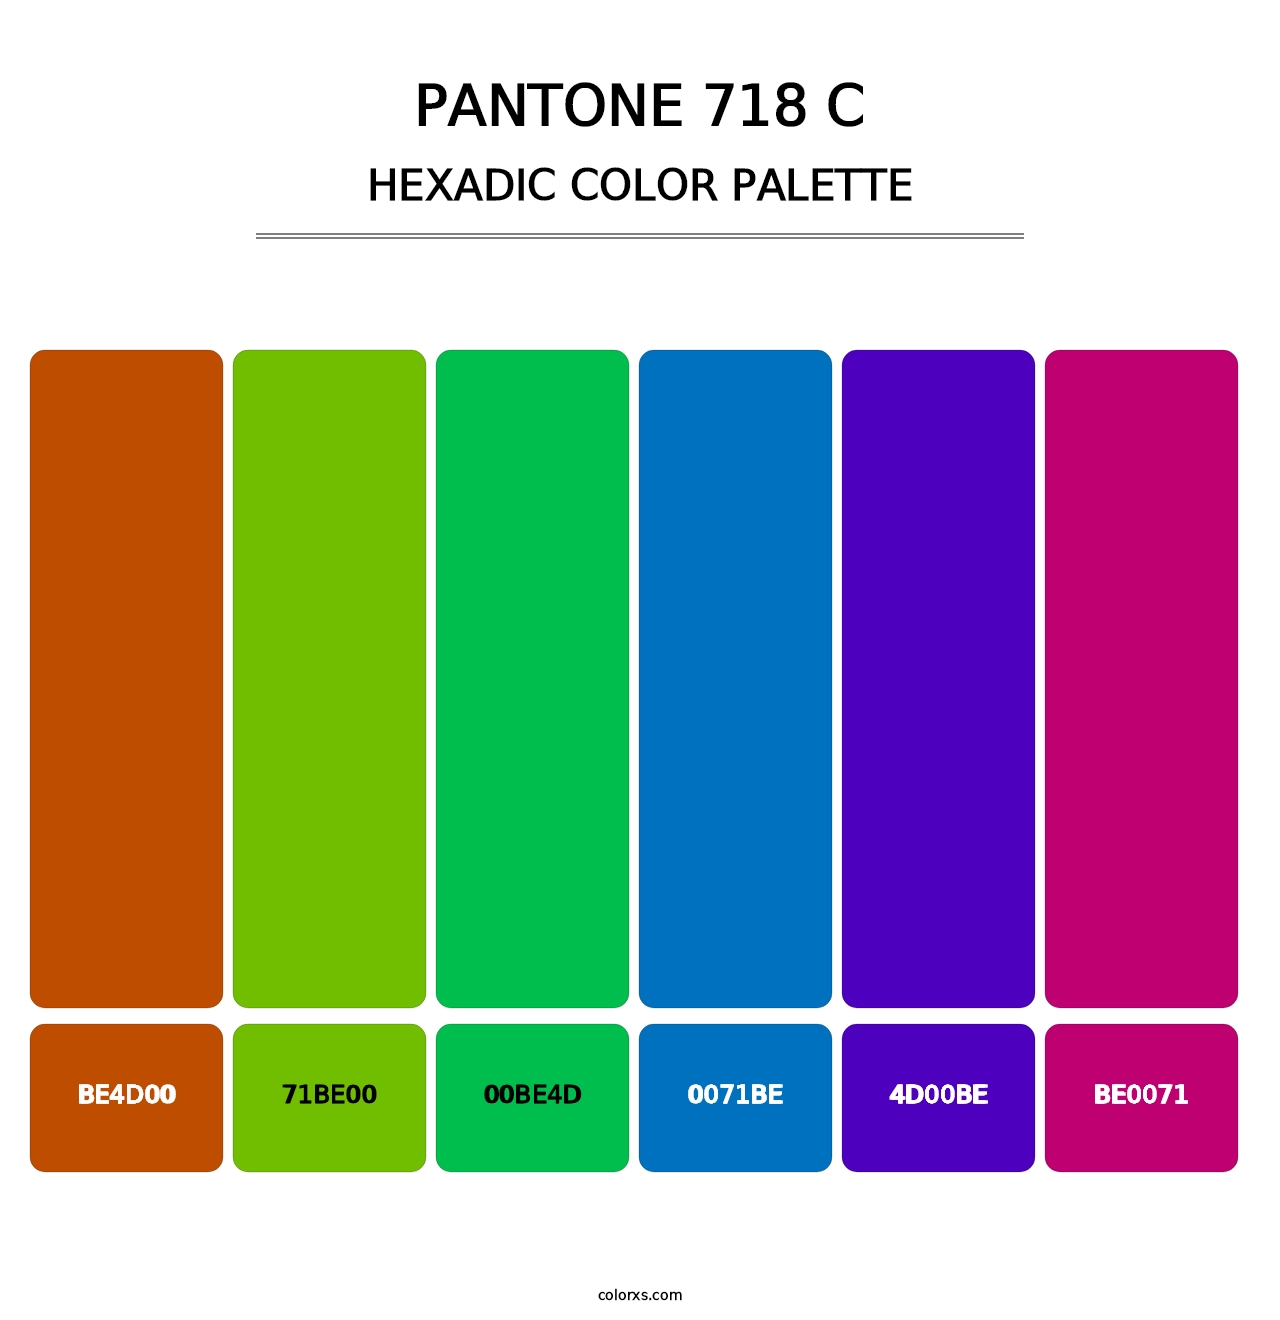 PANTONE 718 C - Hexadic Color Palette